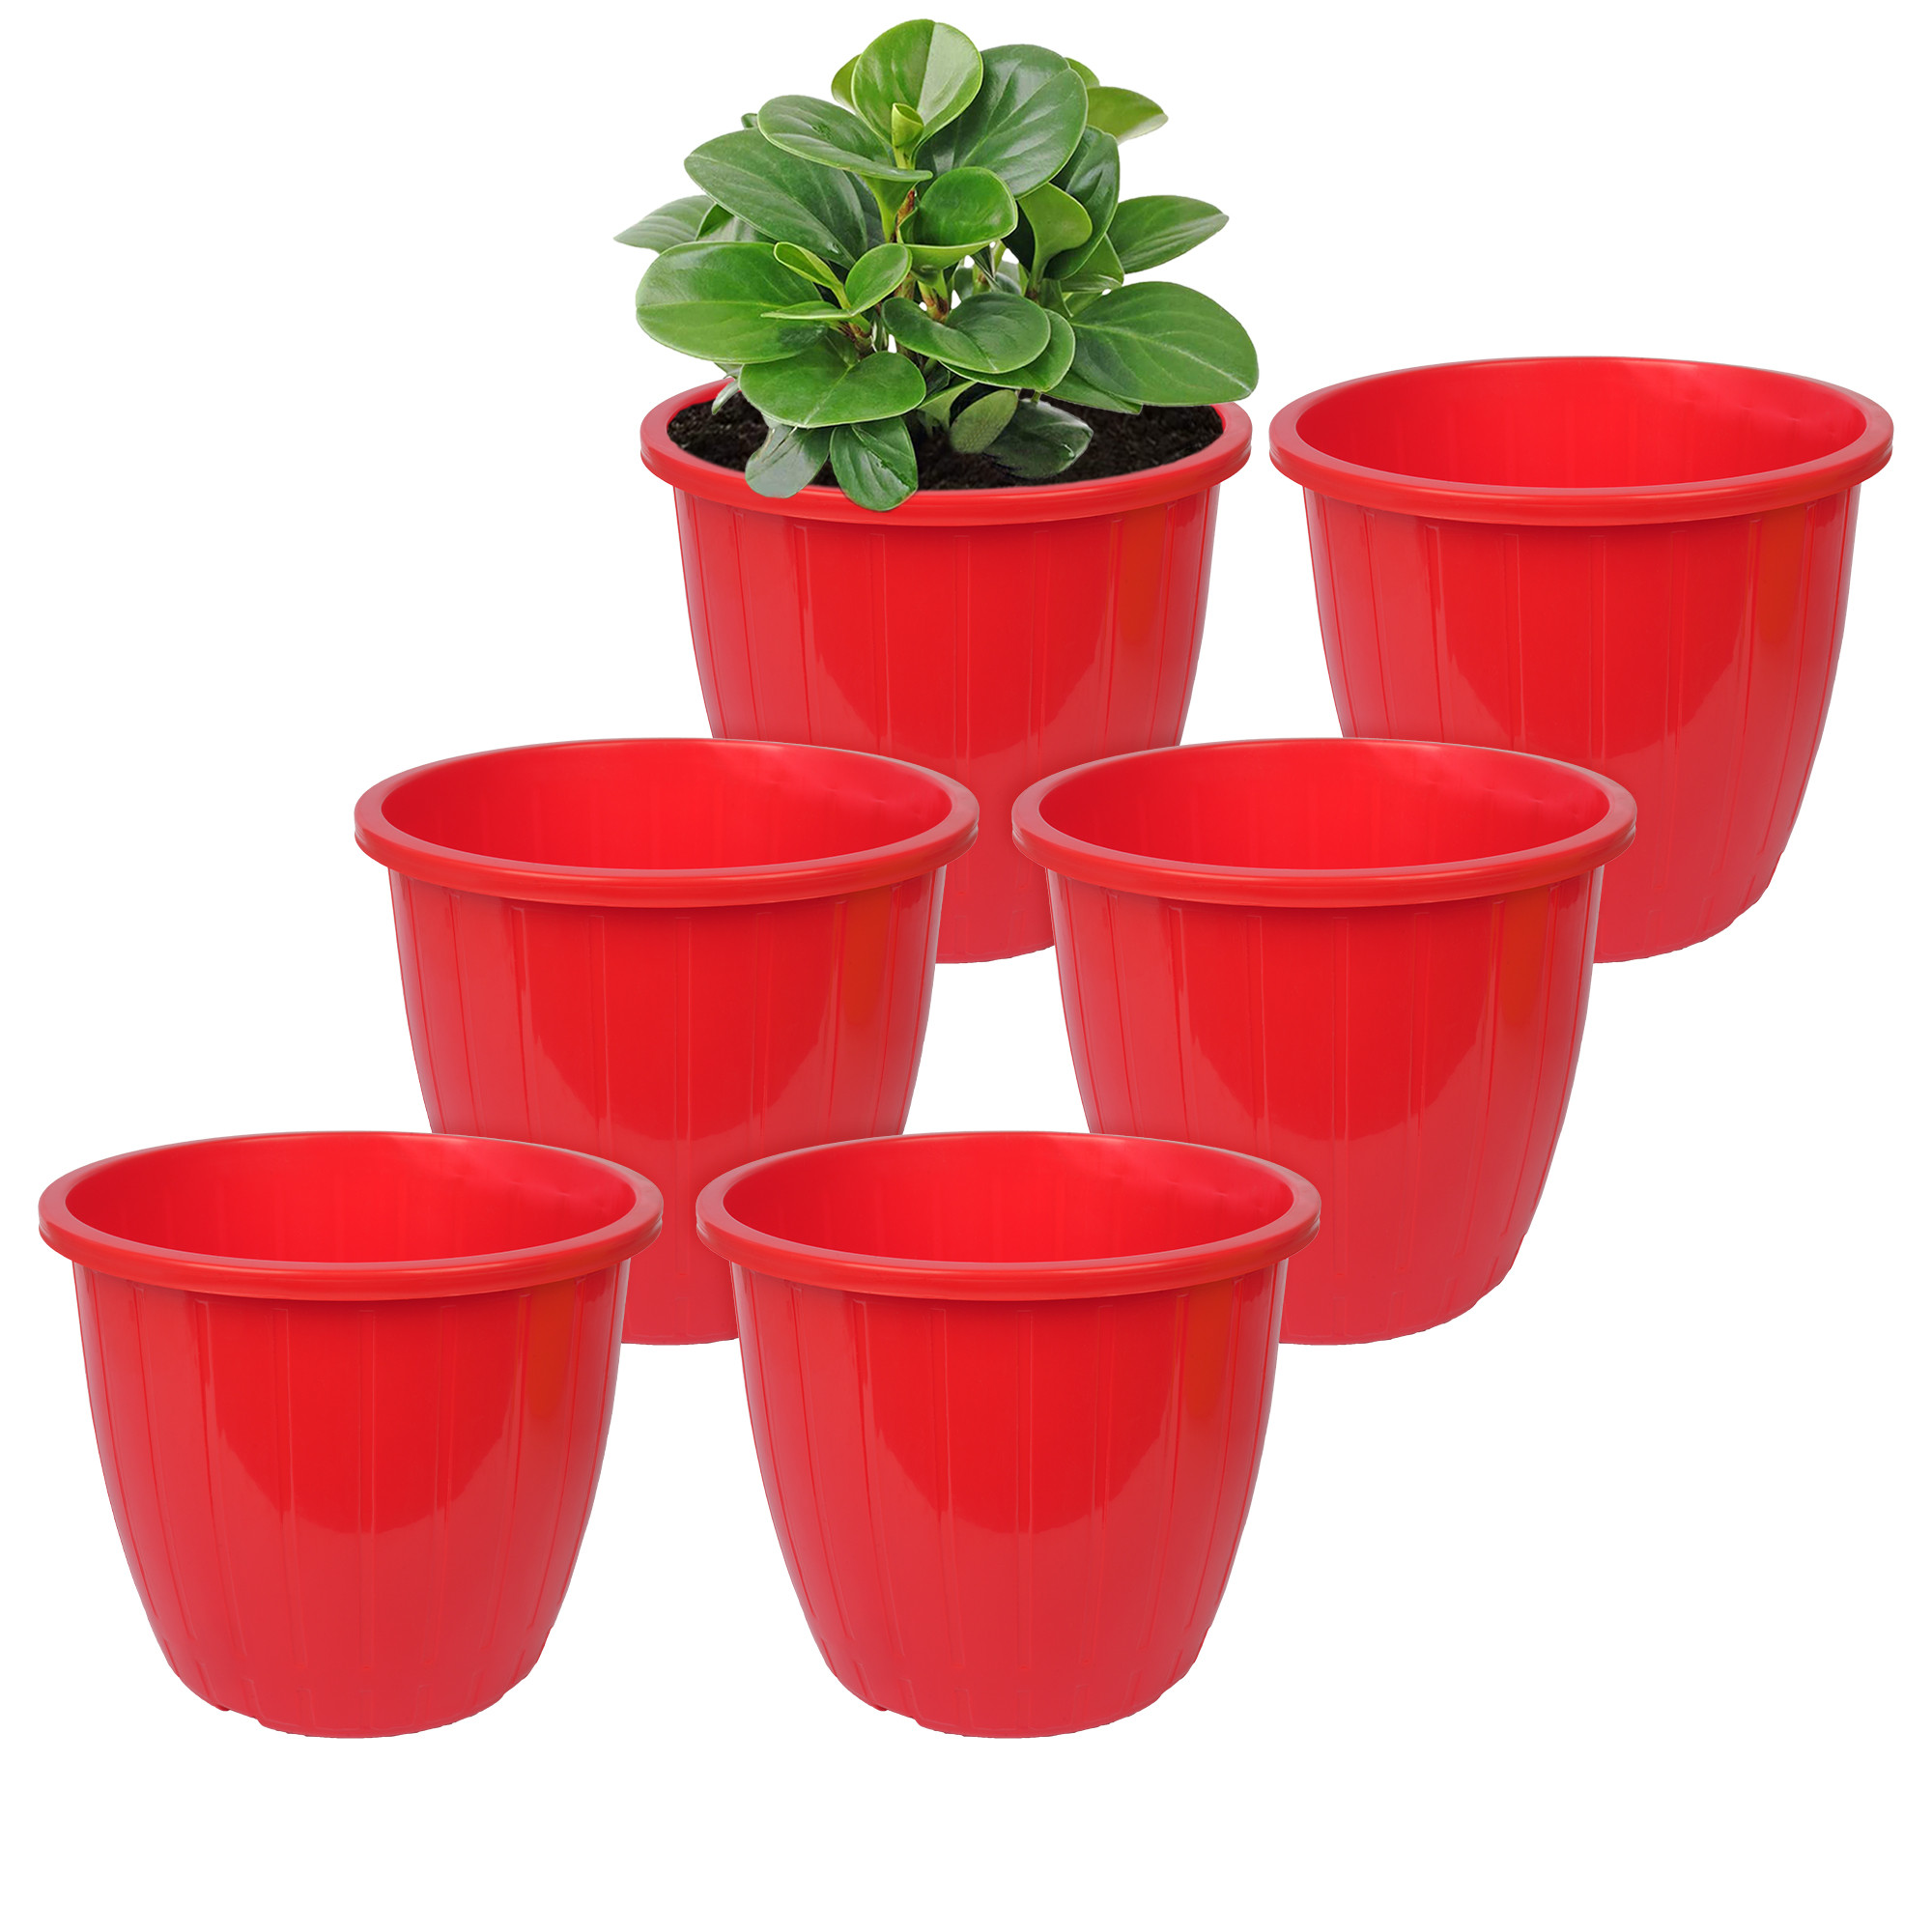 Kuber Industries Flower Pot | Flower Pots for Indoor & Outdoor | Plastic Pot for Gardening | Planter for Flower | Balcony Pots for Home Decor | Duro Flower Pot | 8 Inch | Red